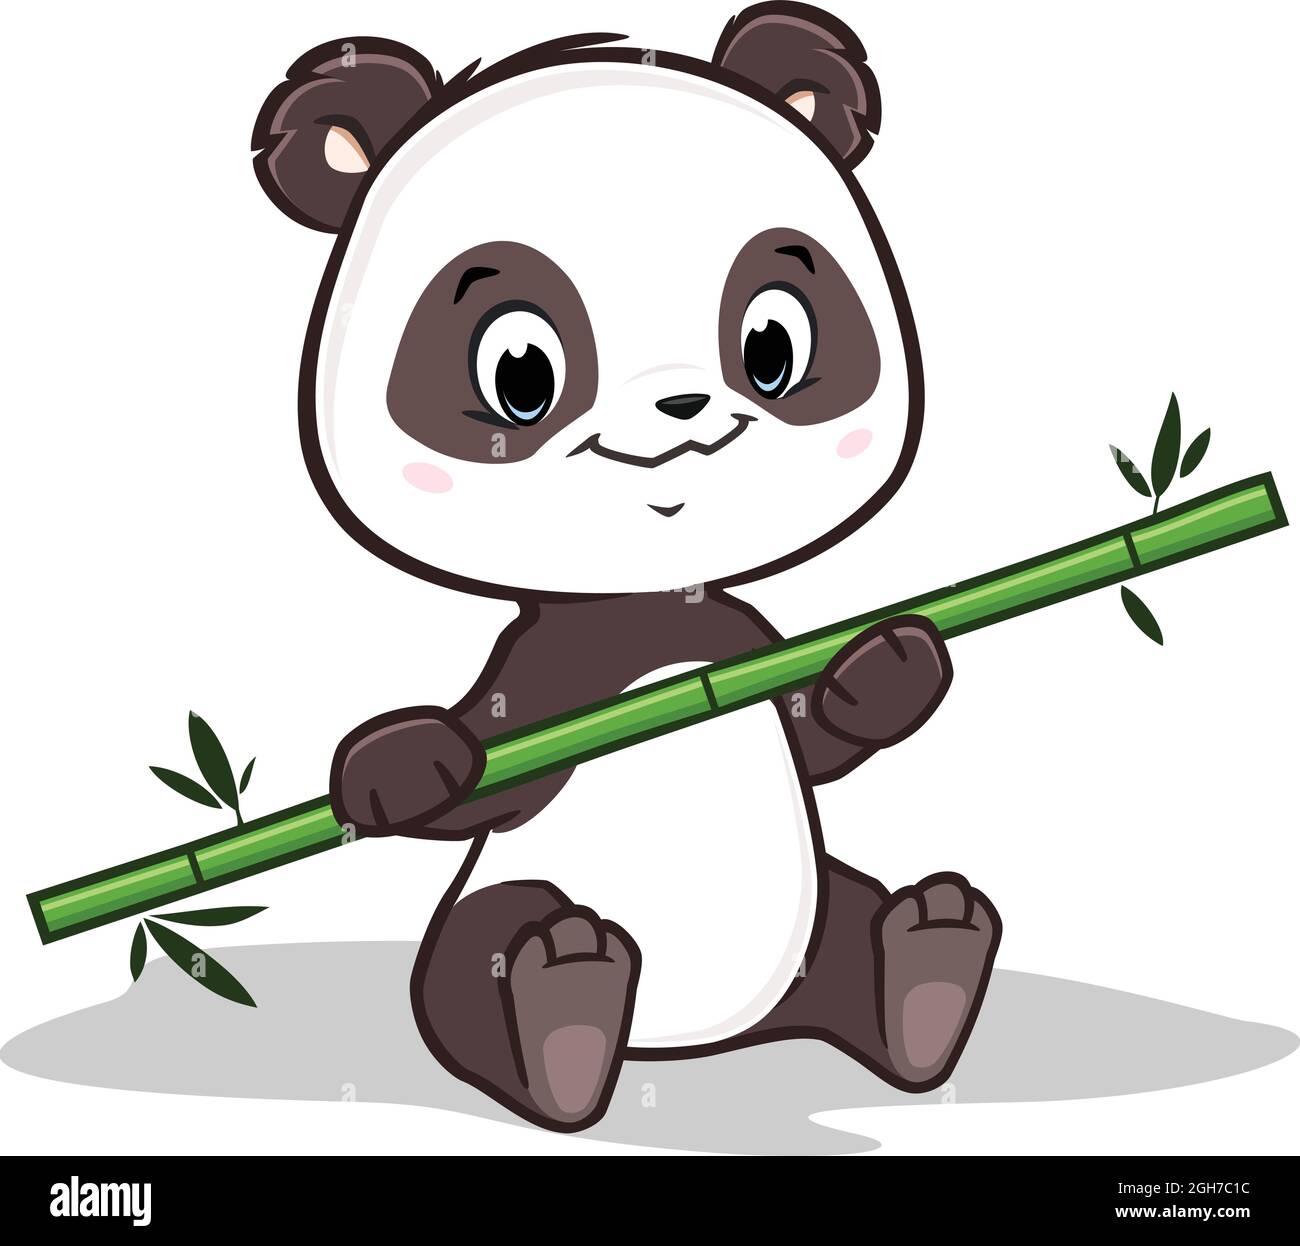 Dibujos animados Baby Panda Imagen Vector de stock - Alamy